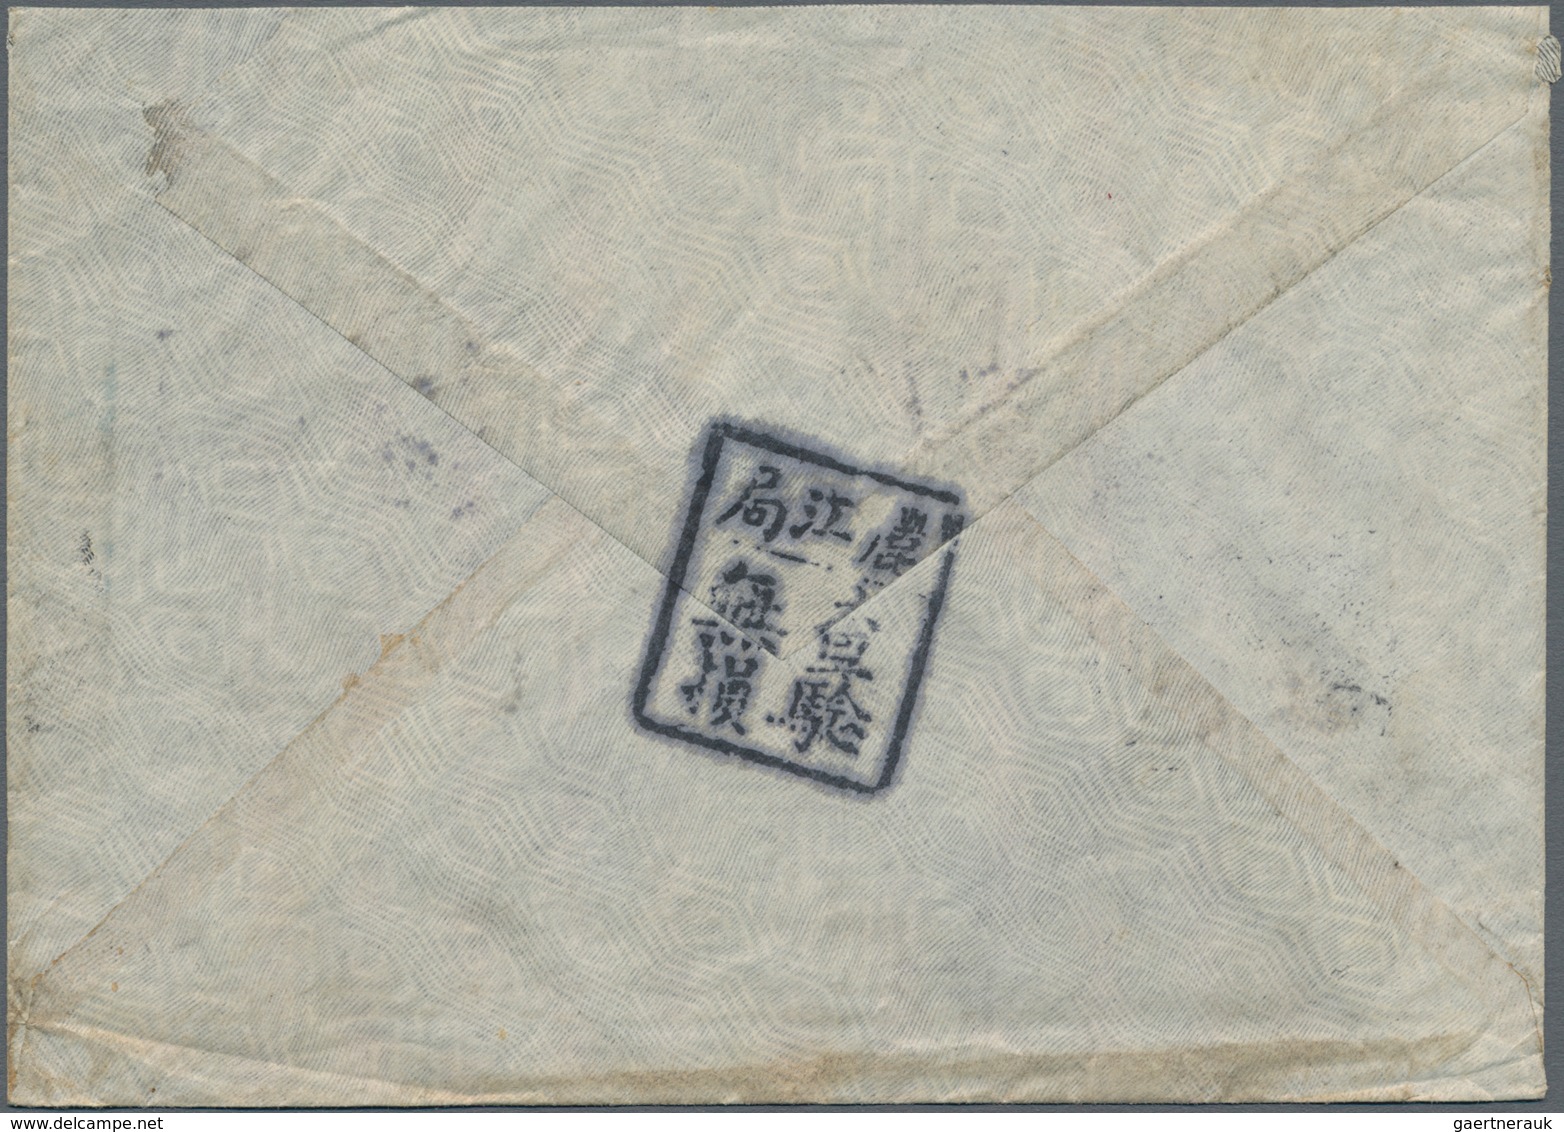 China: 1915, Peking Printing, Junk 8 C. Orange, A Top Margin Copy, With Junk 3 C. Green Both Tied Bo - 1912-1949 République